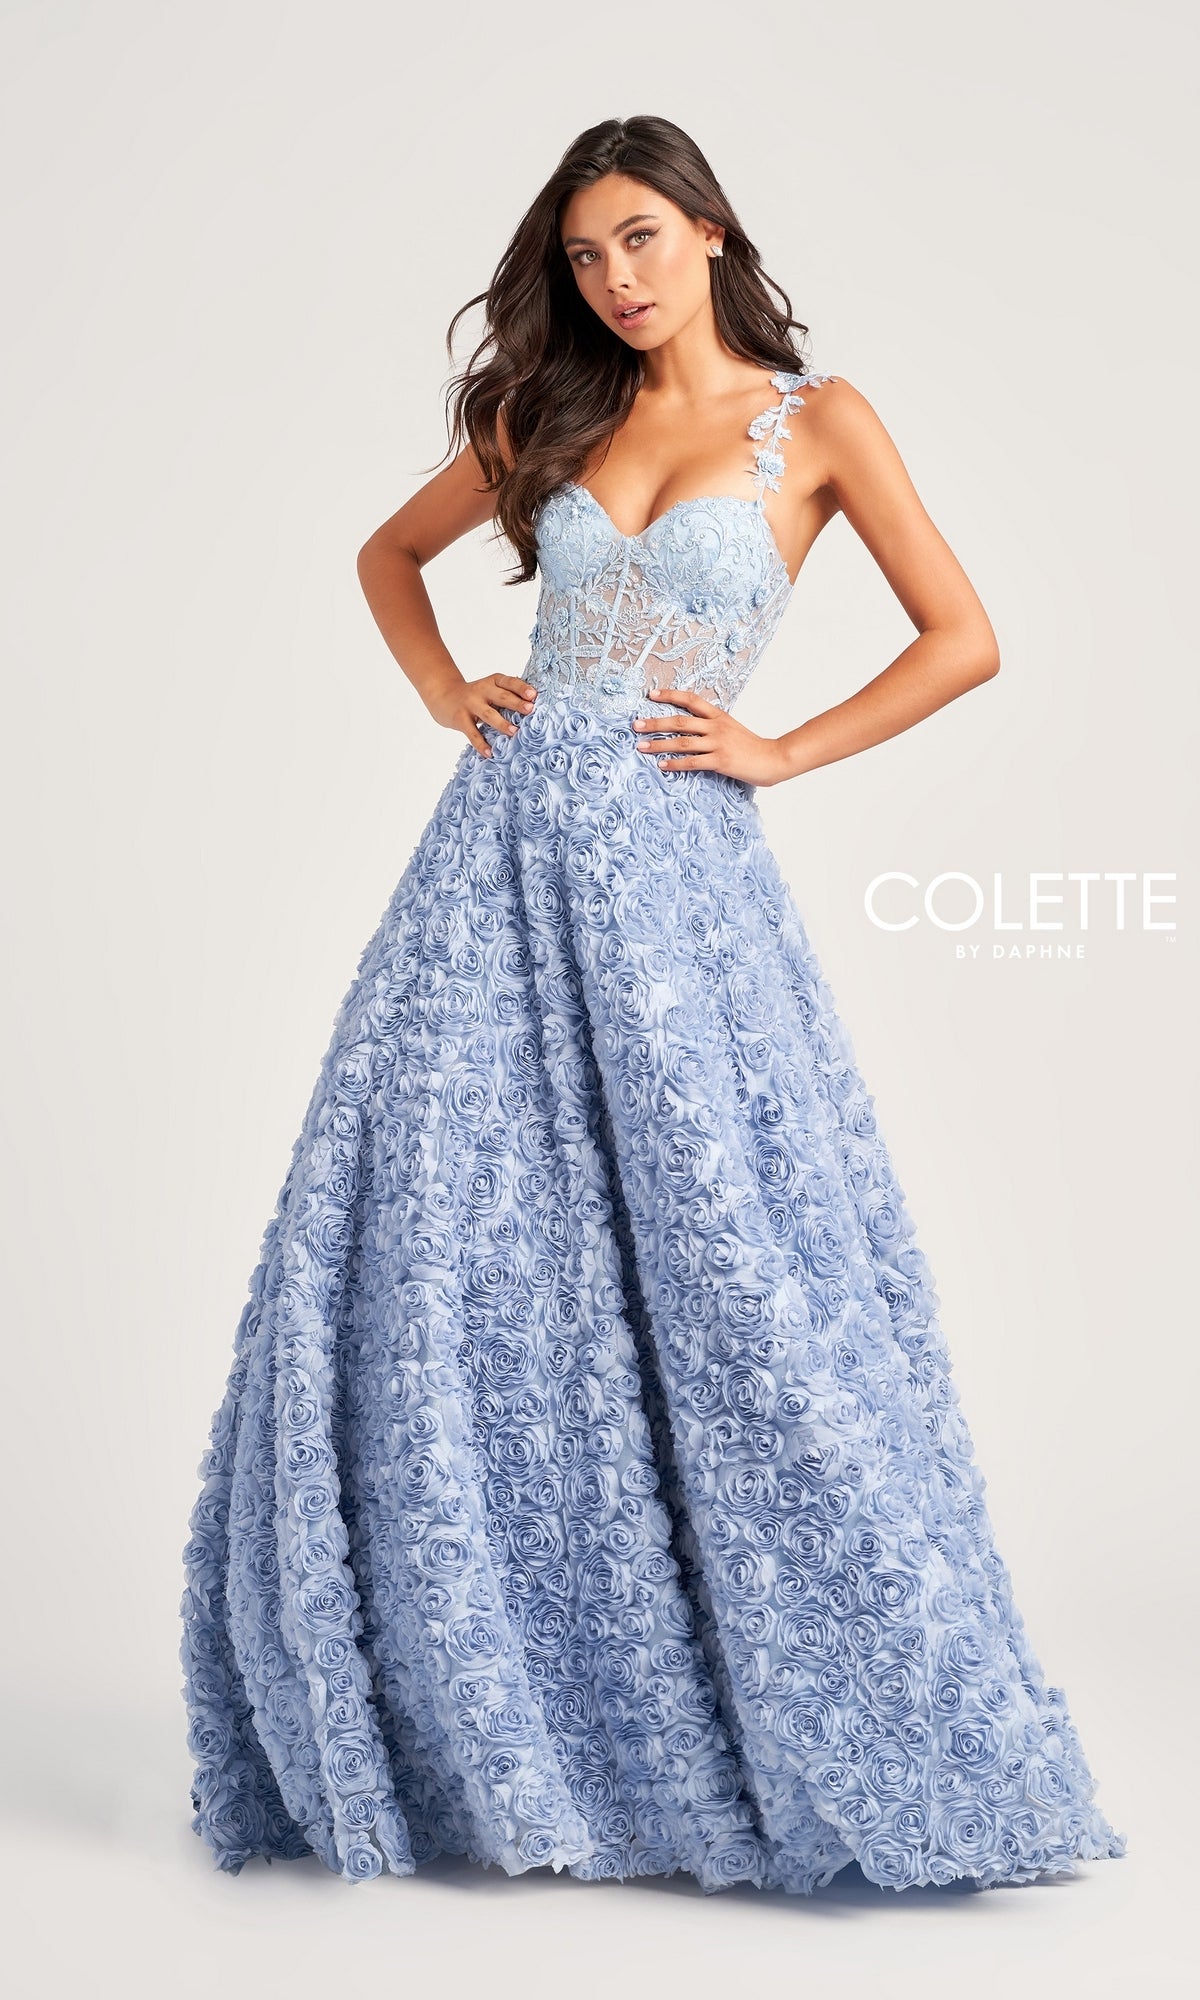 Colette Light Blue Long Rosette Prom Gown CL5250